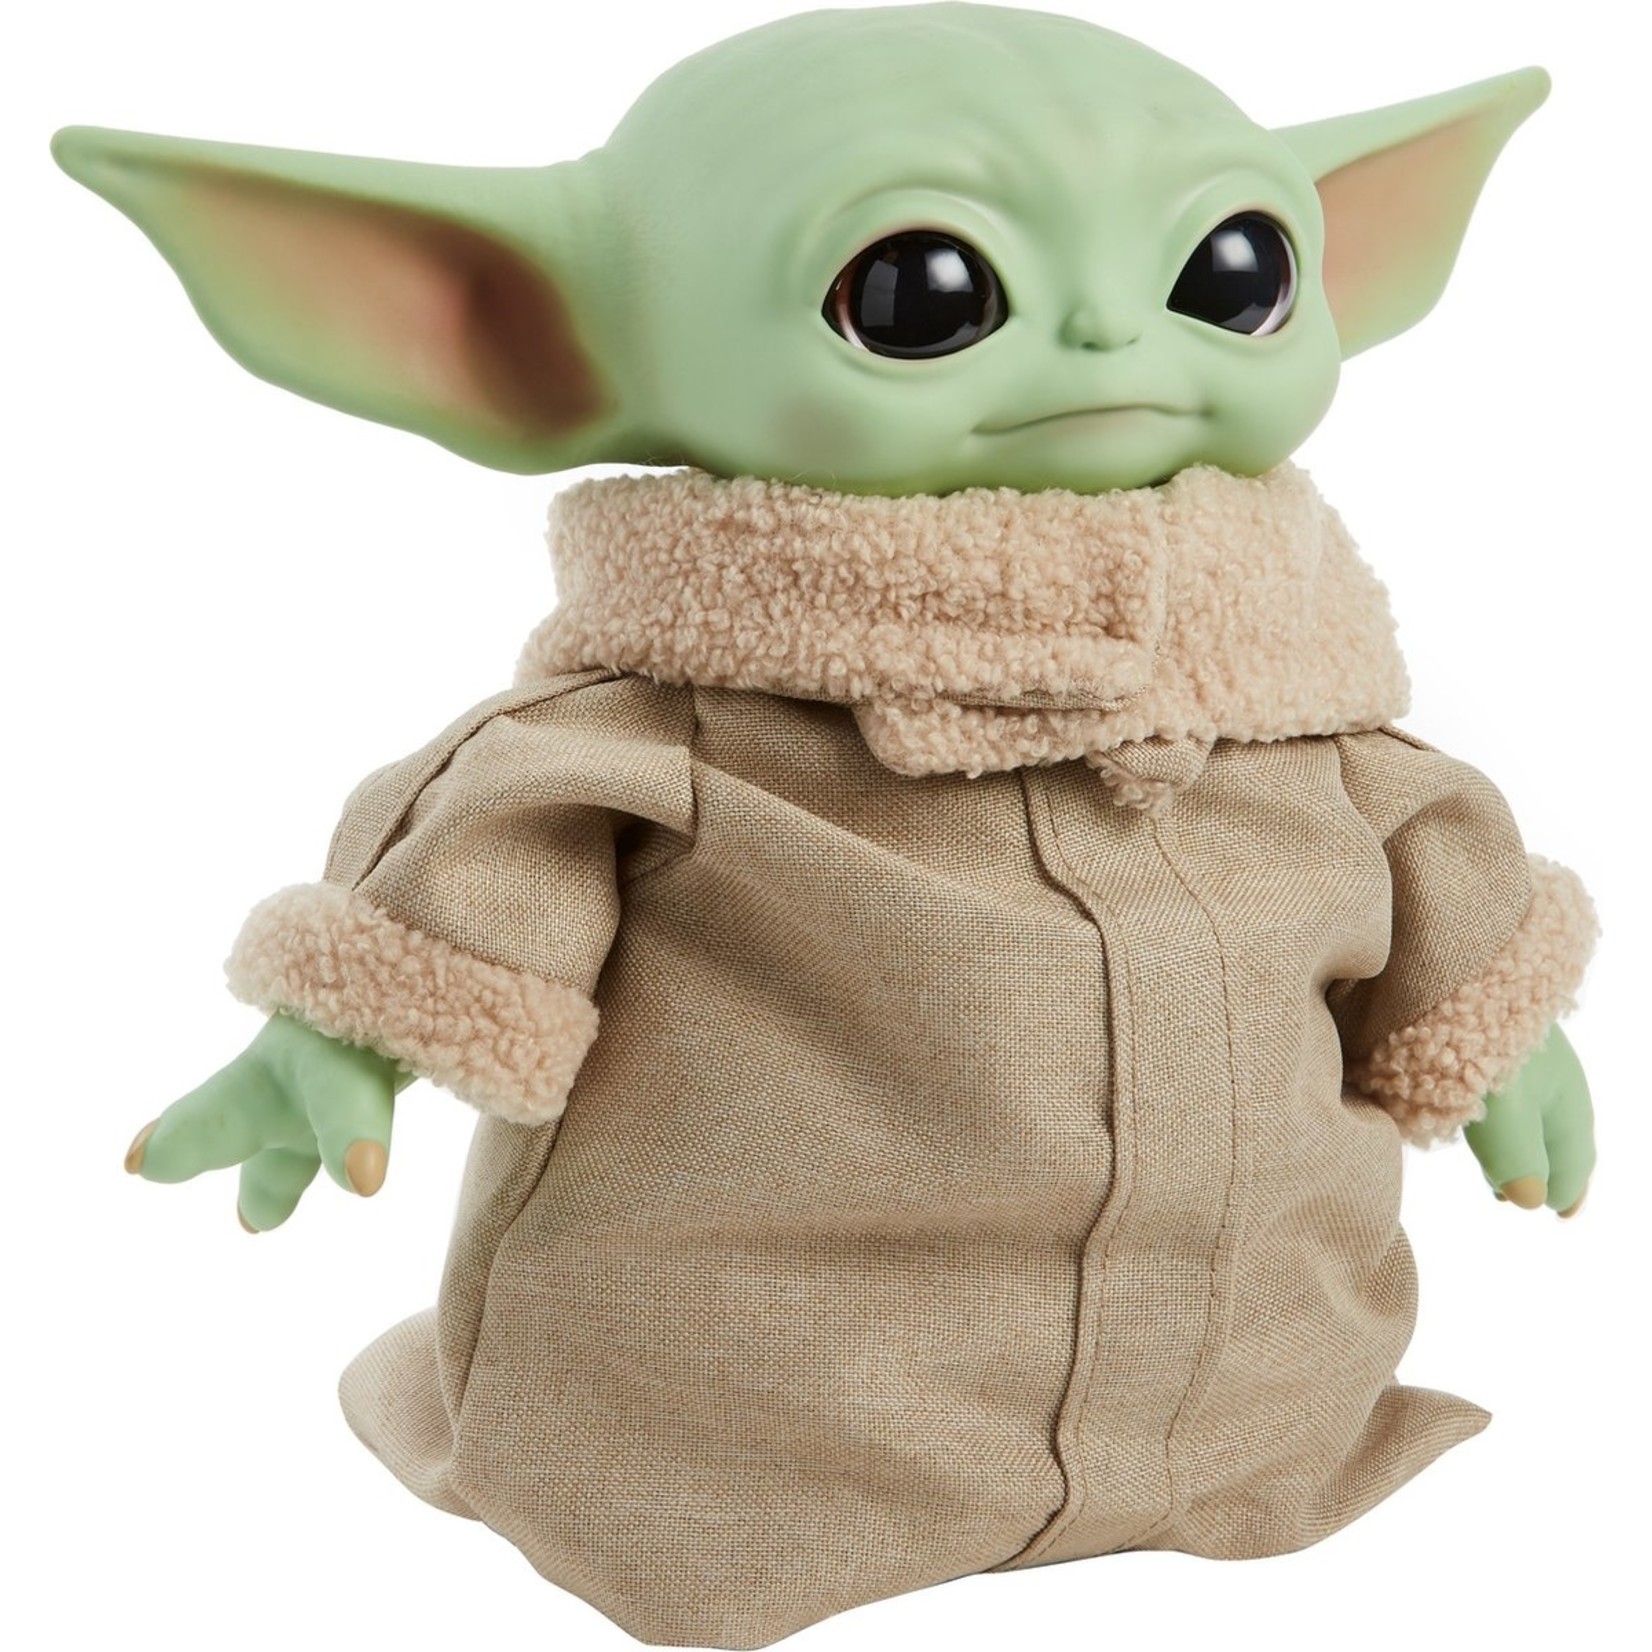 Mattel Star Wars The Mandalorian The Child Baby Yoda